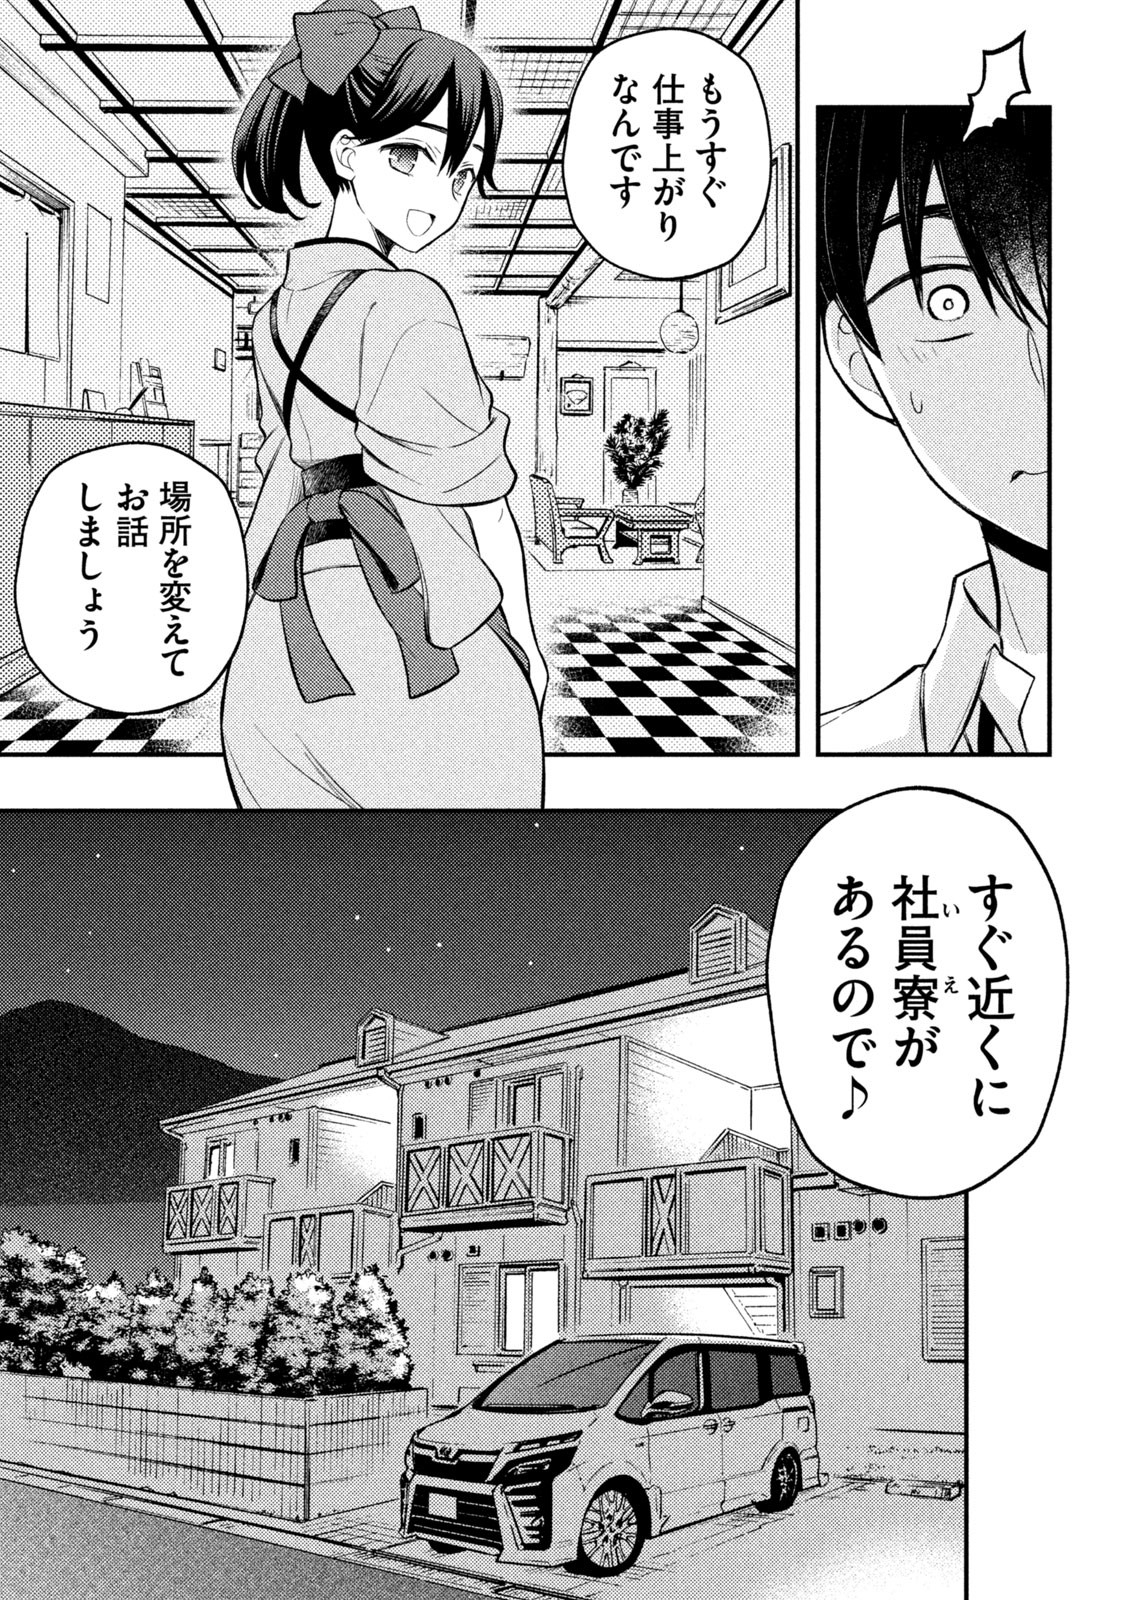 Watari-kun no xx ga Houkai Sunzen - Chapter 78 - Page 3